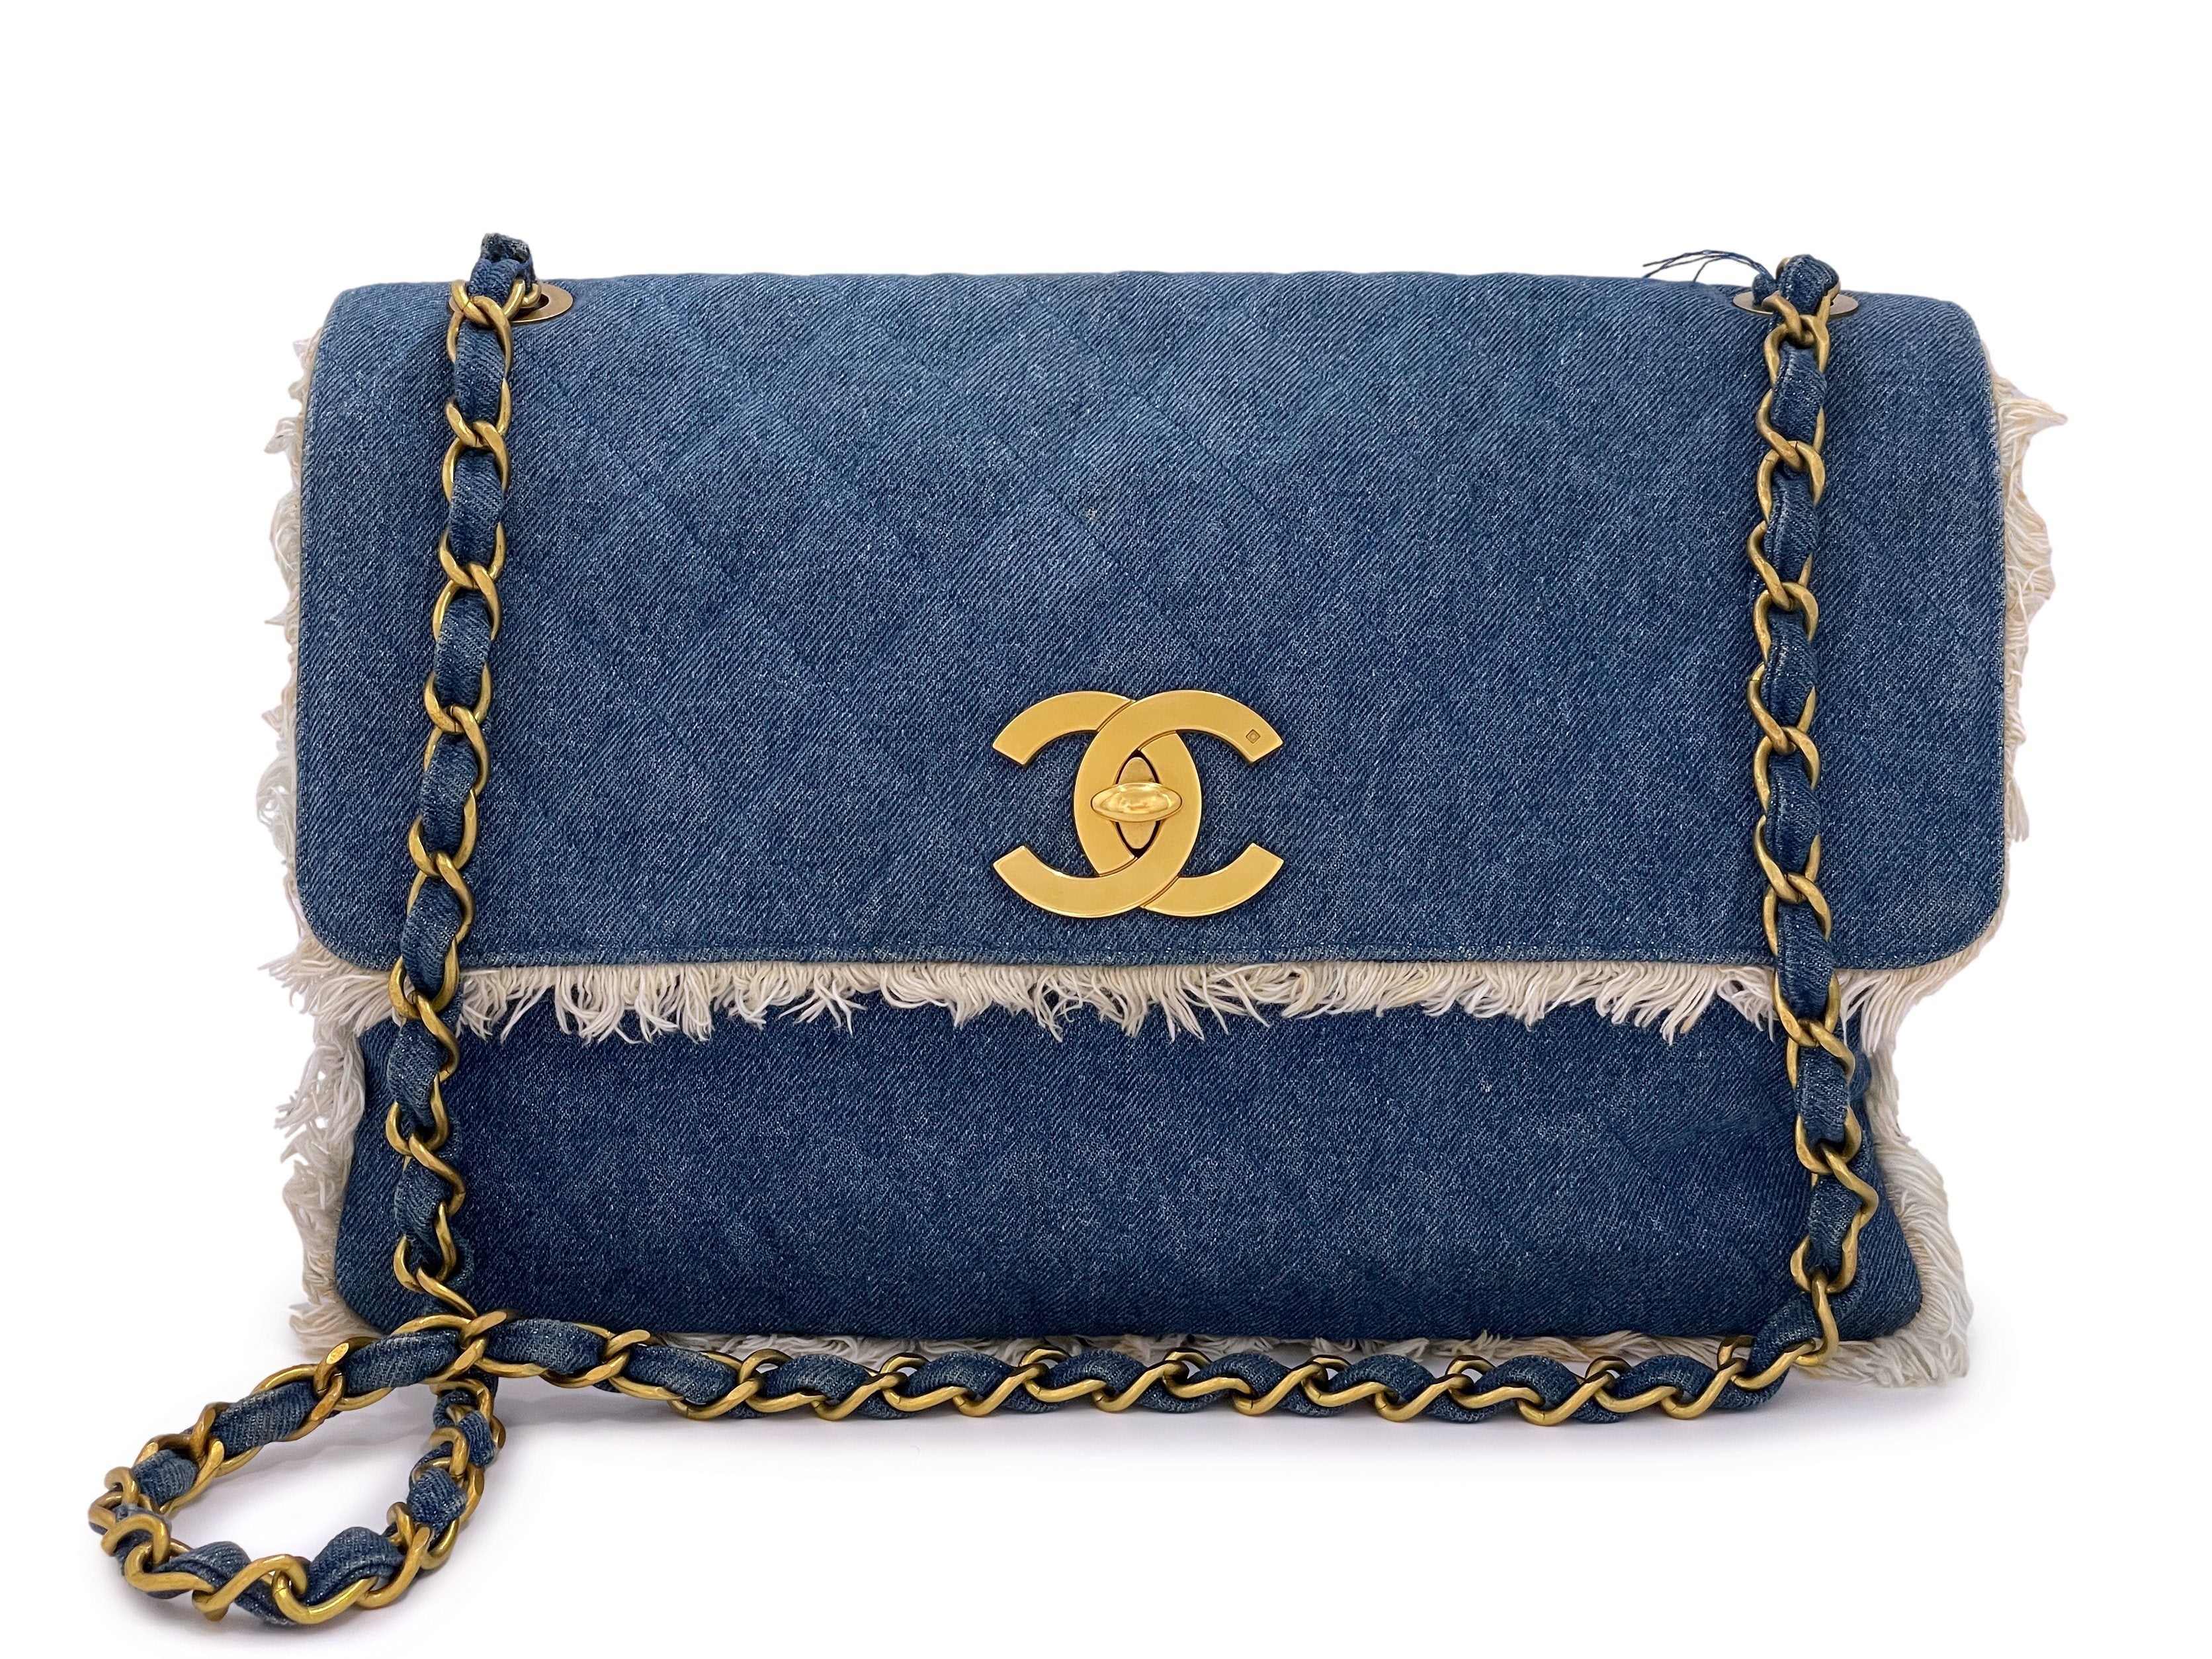 CHANEL Bag in Blue Denim Fabric with Beige Stitching - VALOIS VINTAGE PARIS